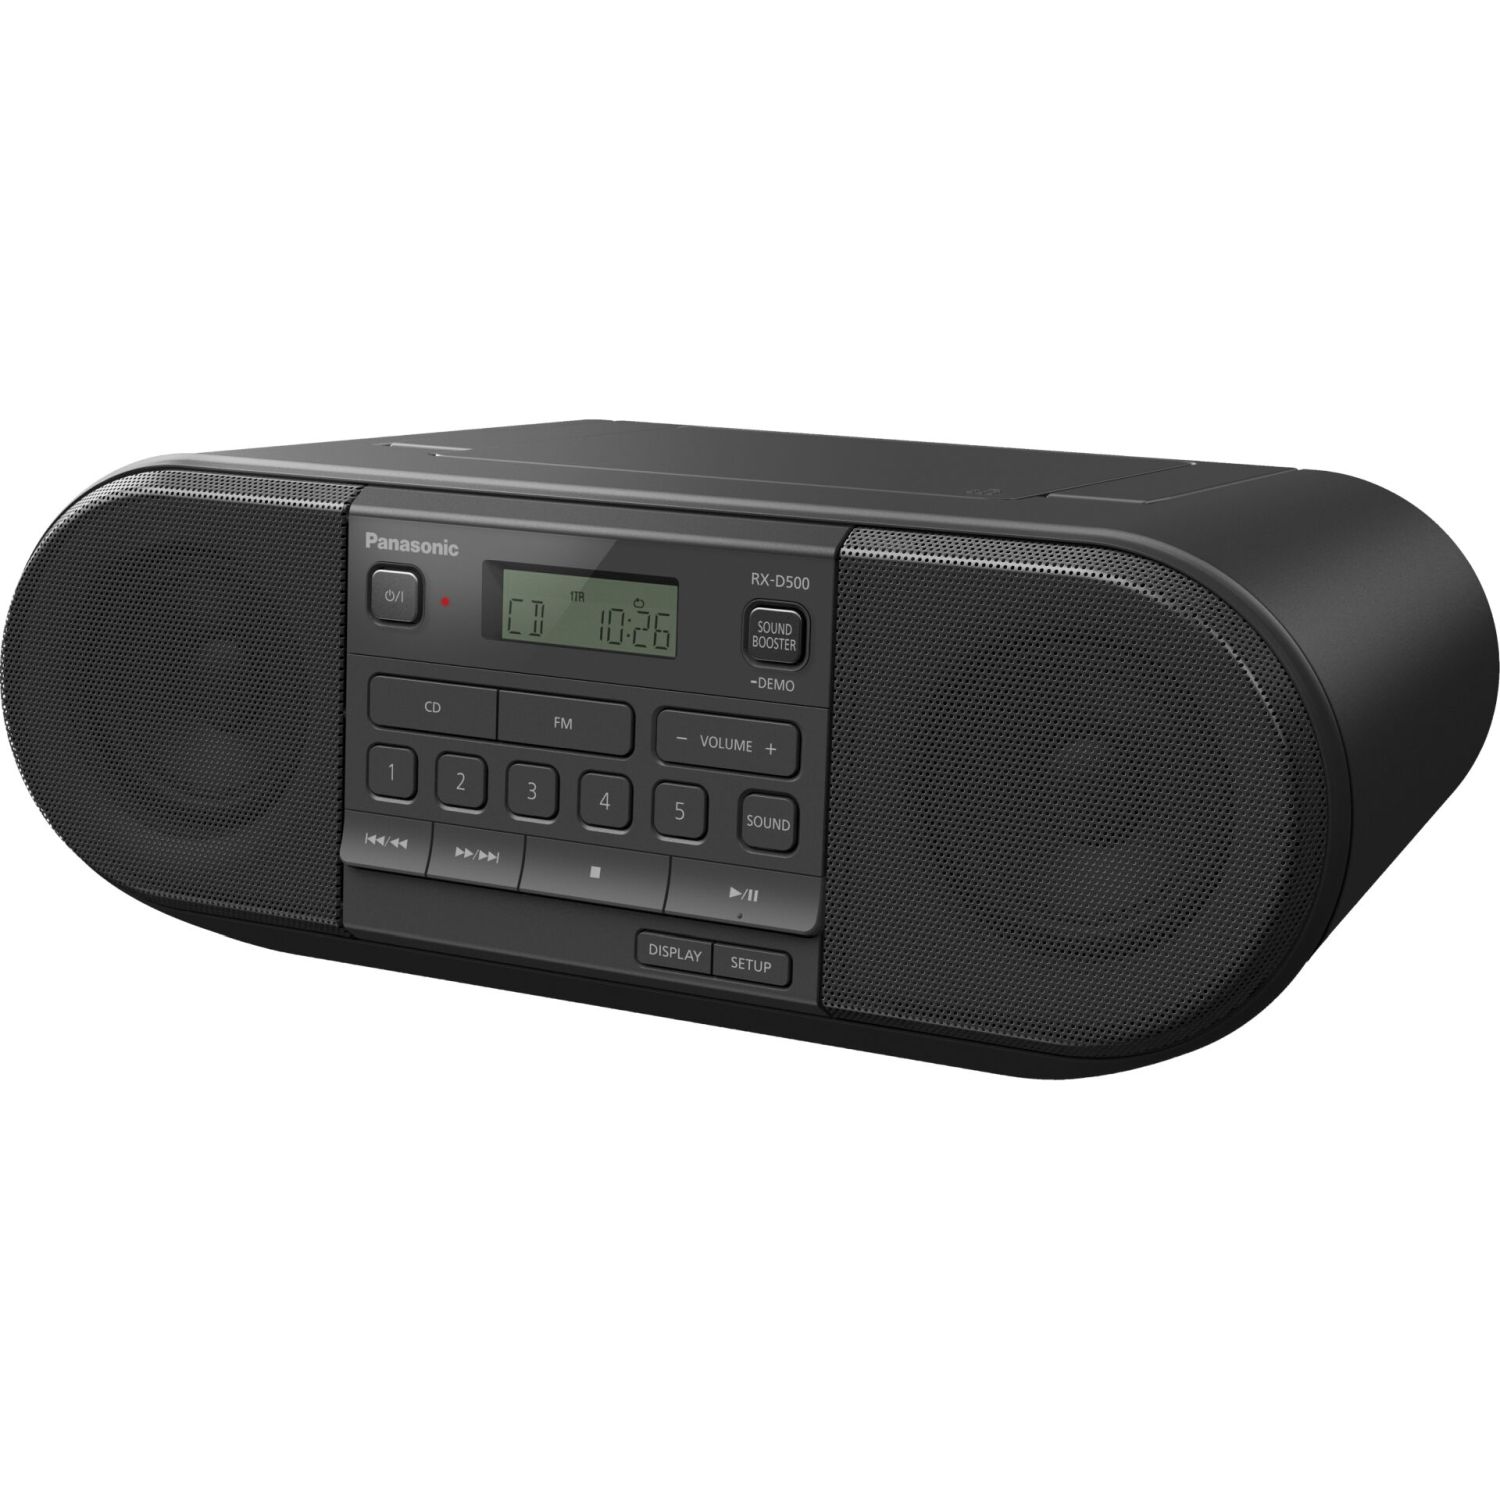 Boom CD RX-D500EG-K Radio UKW Panasonic Box